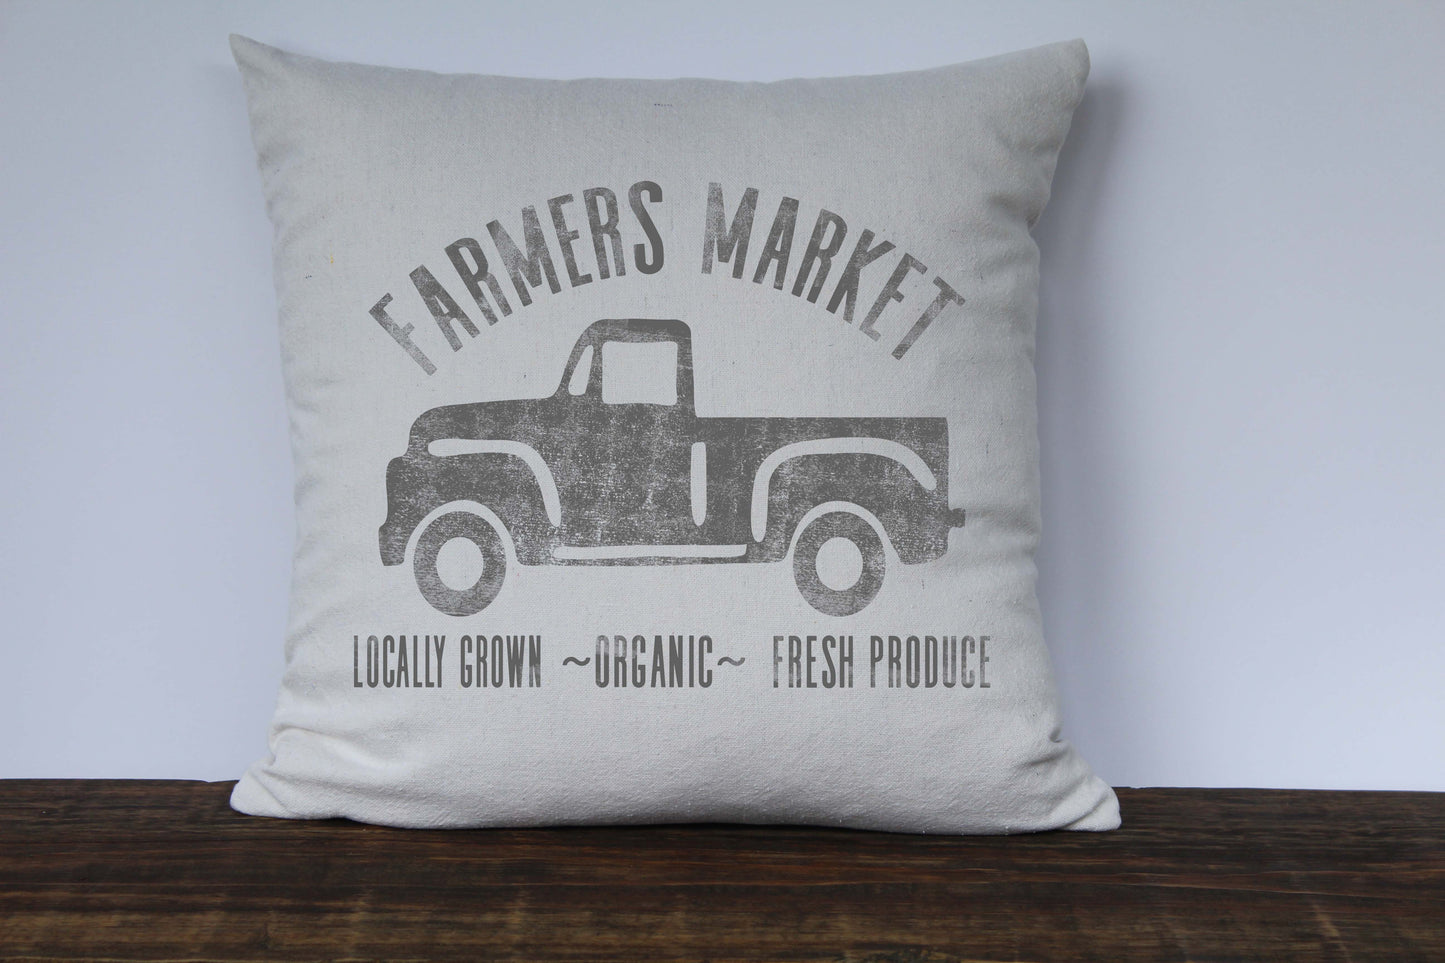 Farmers Market Vintage Truck Pillow Cover - Returning Grace Designs